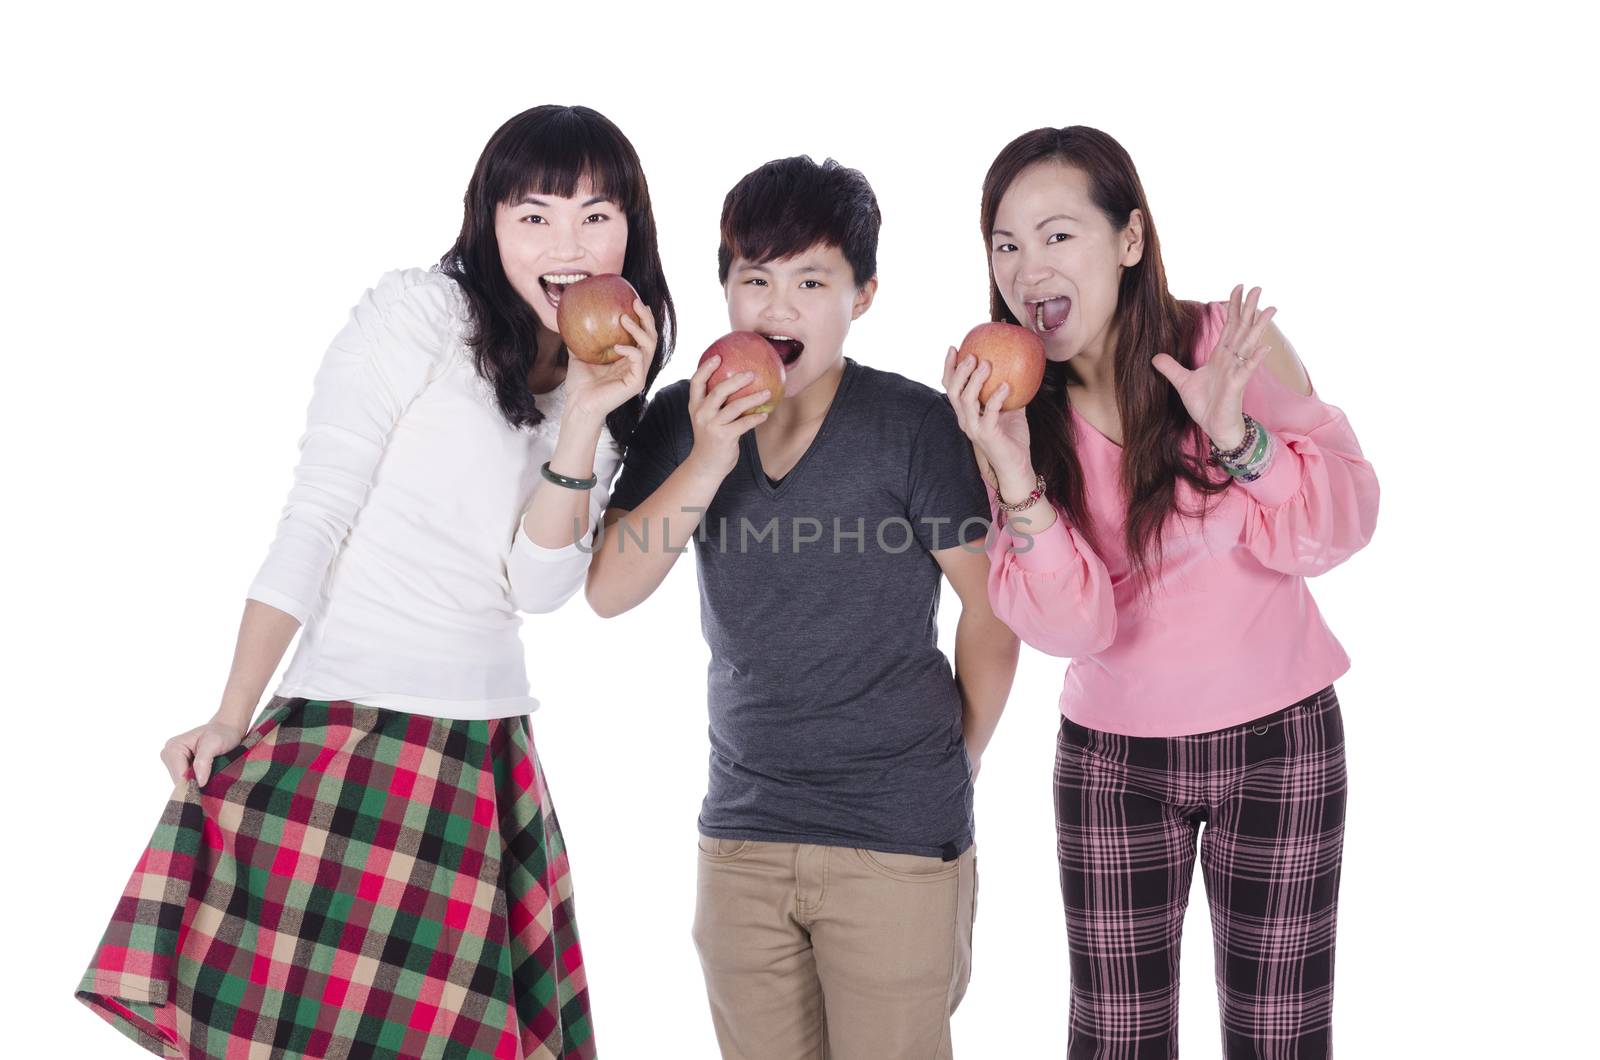 Pretty girls eating apples by FrankyLiu